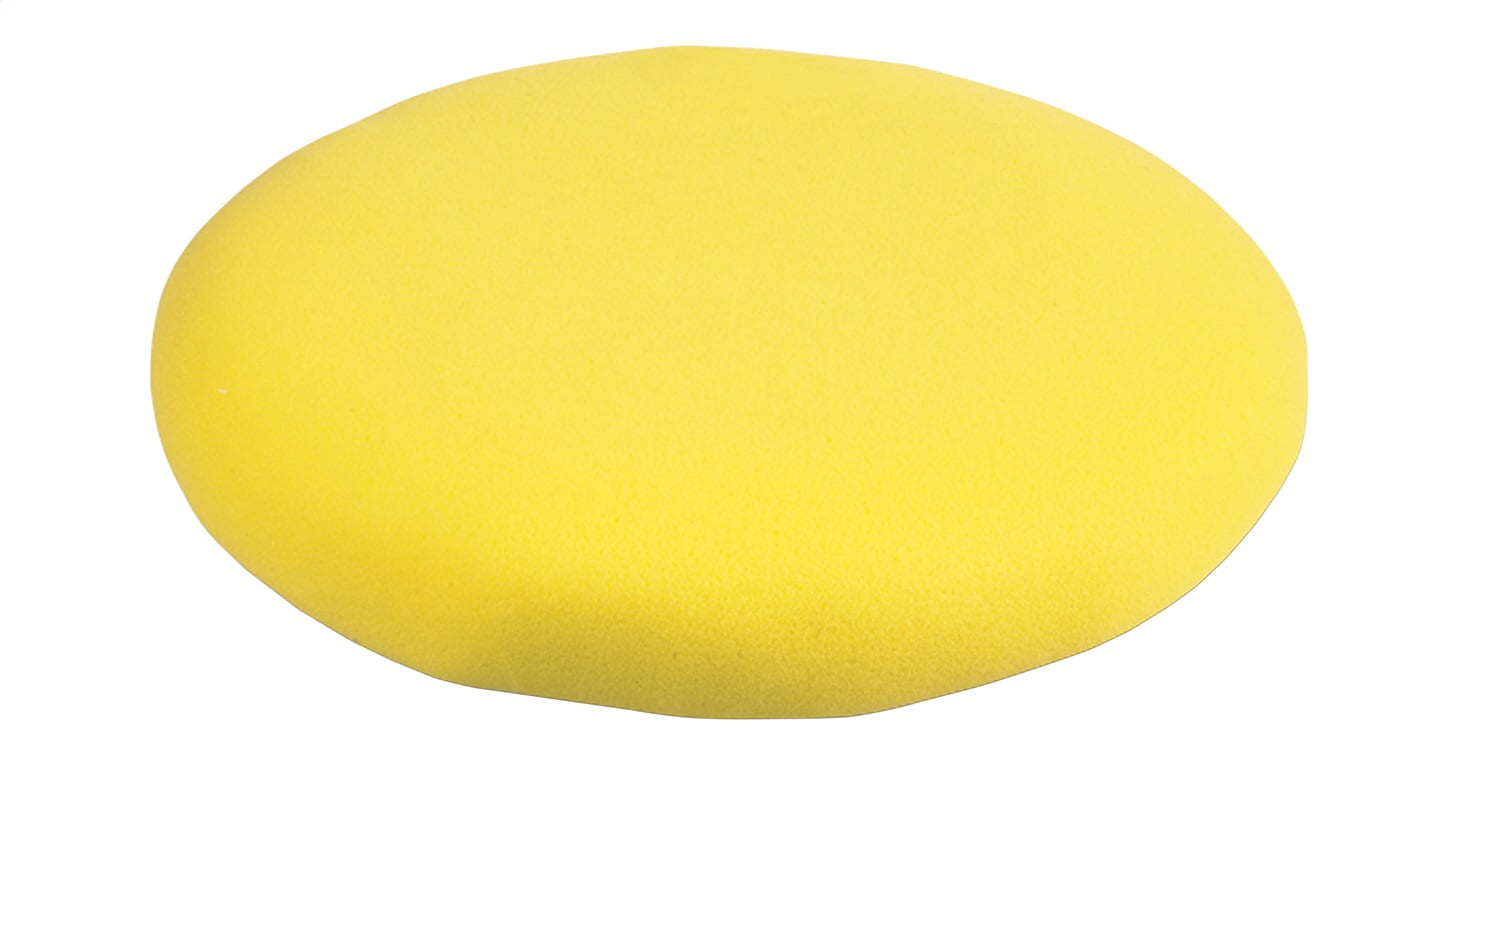 NOGIS 12 Pack 4 Foam Applicator Pads, Super Soft Car Cleaning Yellow Round  Car Foam Sponge Foam Applicator Pad Washing Foam Sponge Cleaning Tool for